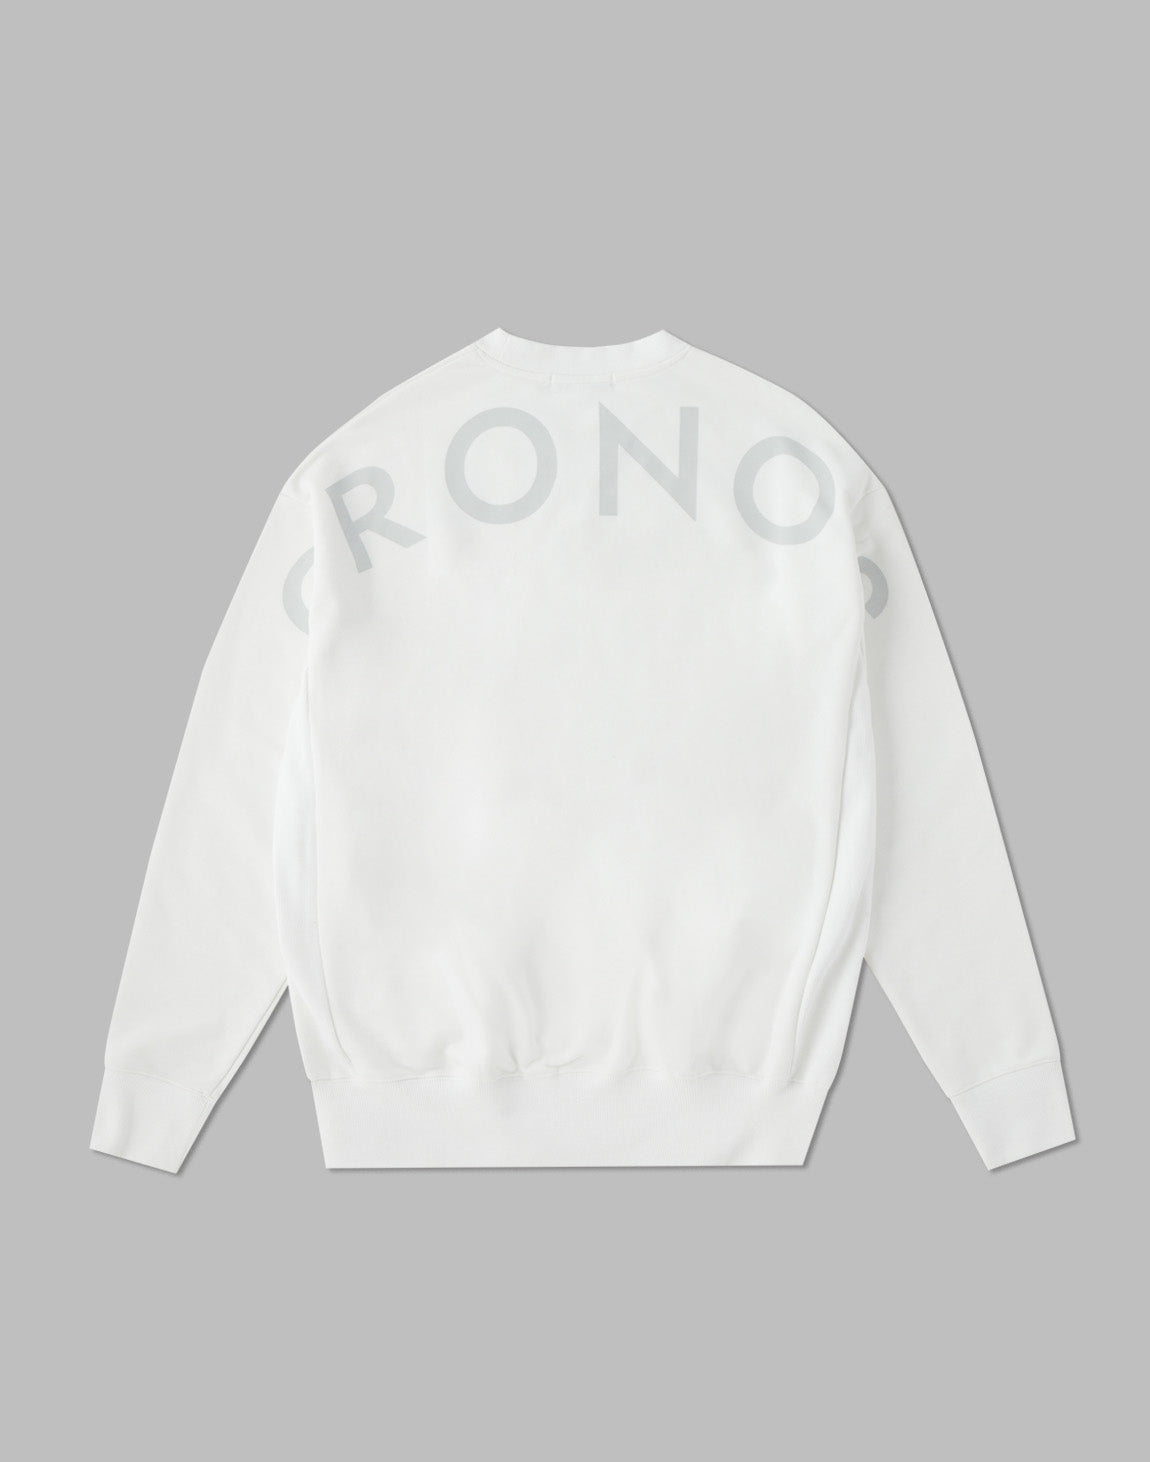 CRONOS BACK LOGO SWEAT TOP – クロノス CRONOS Official Store